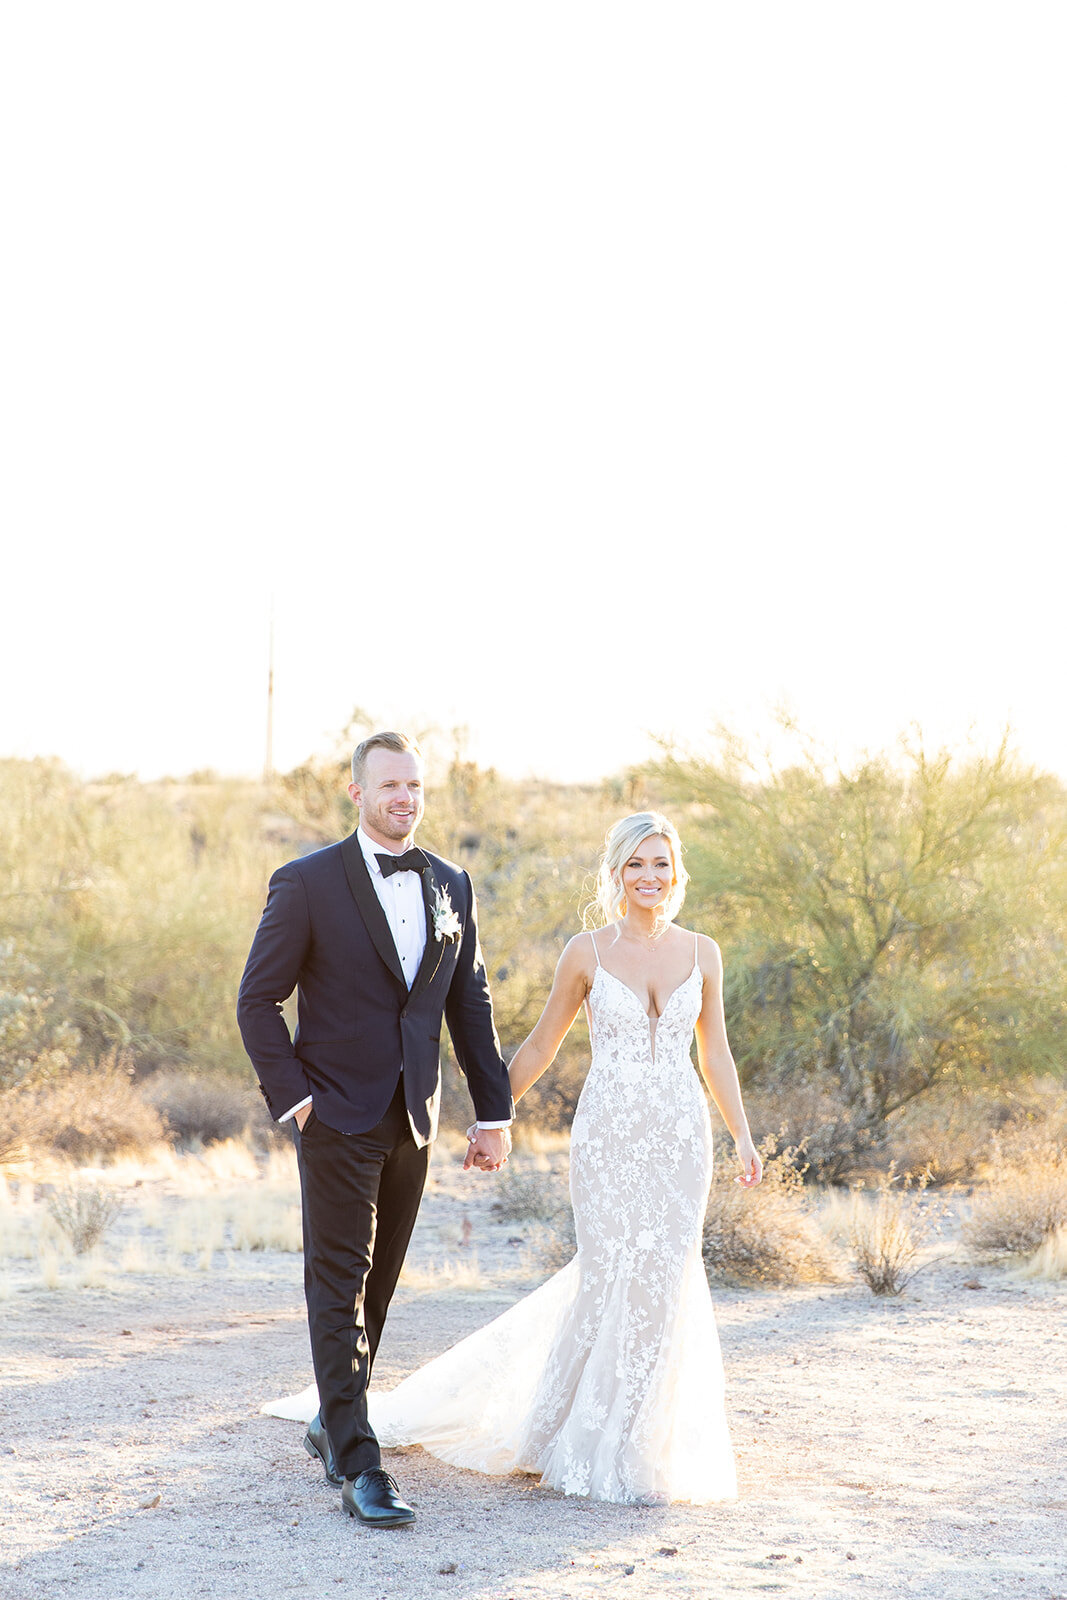 Karlie Colleen Photography - Ashley & Grant Wedding - The Paseo - Phoenix Arizona-797